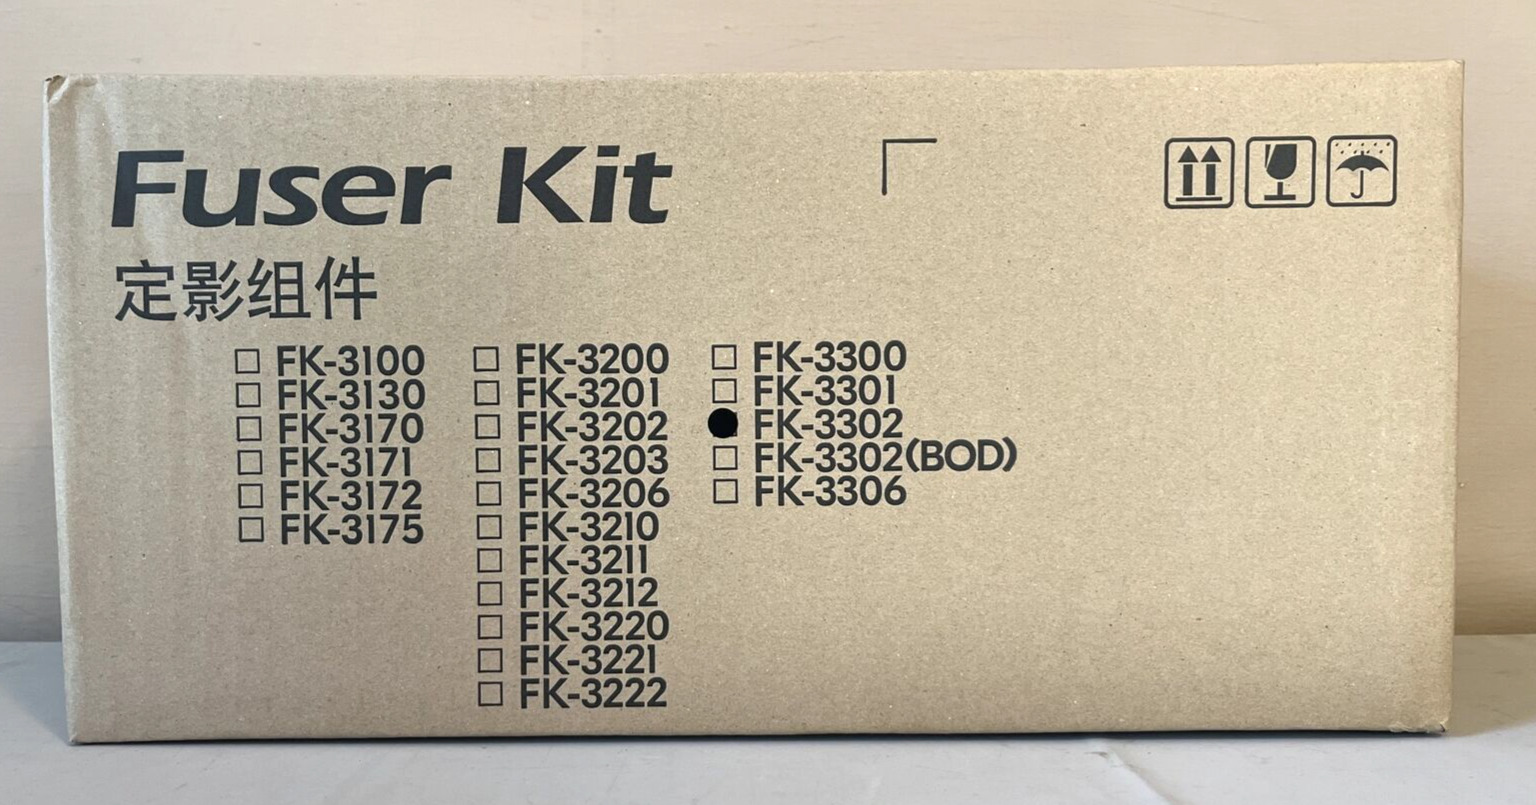 Genuine Kyocera FK-3302 Fuser Kit Cartridge New Sealed Box